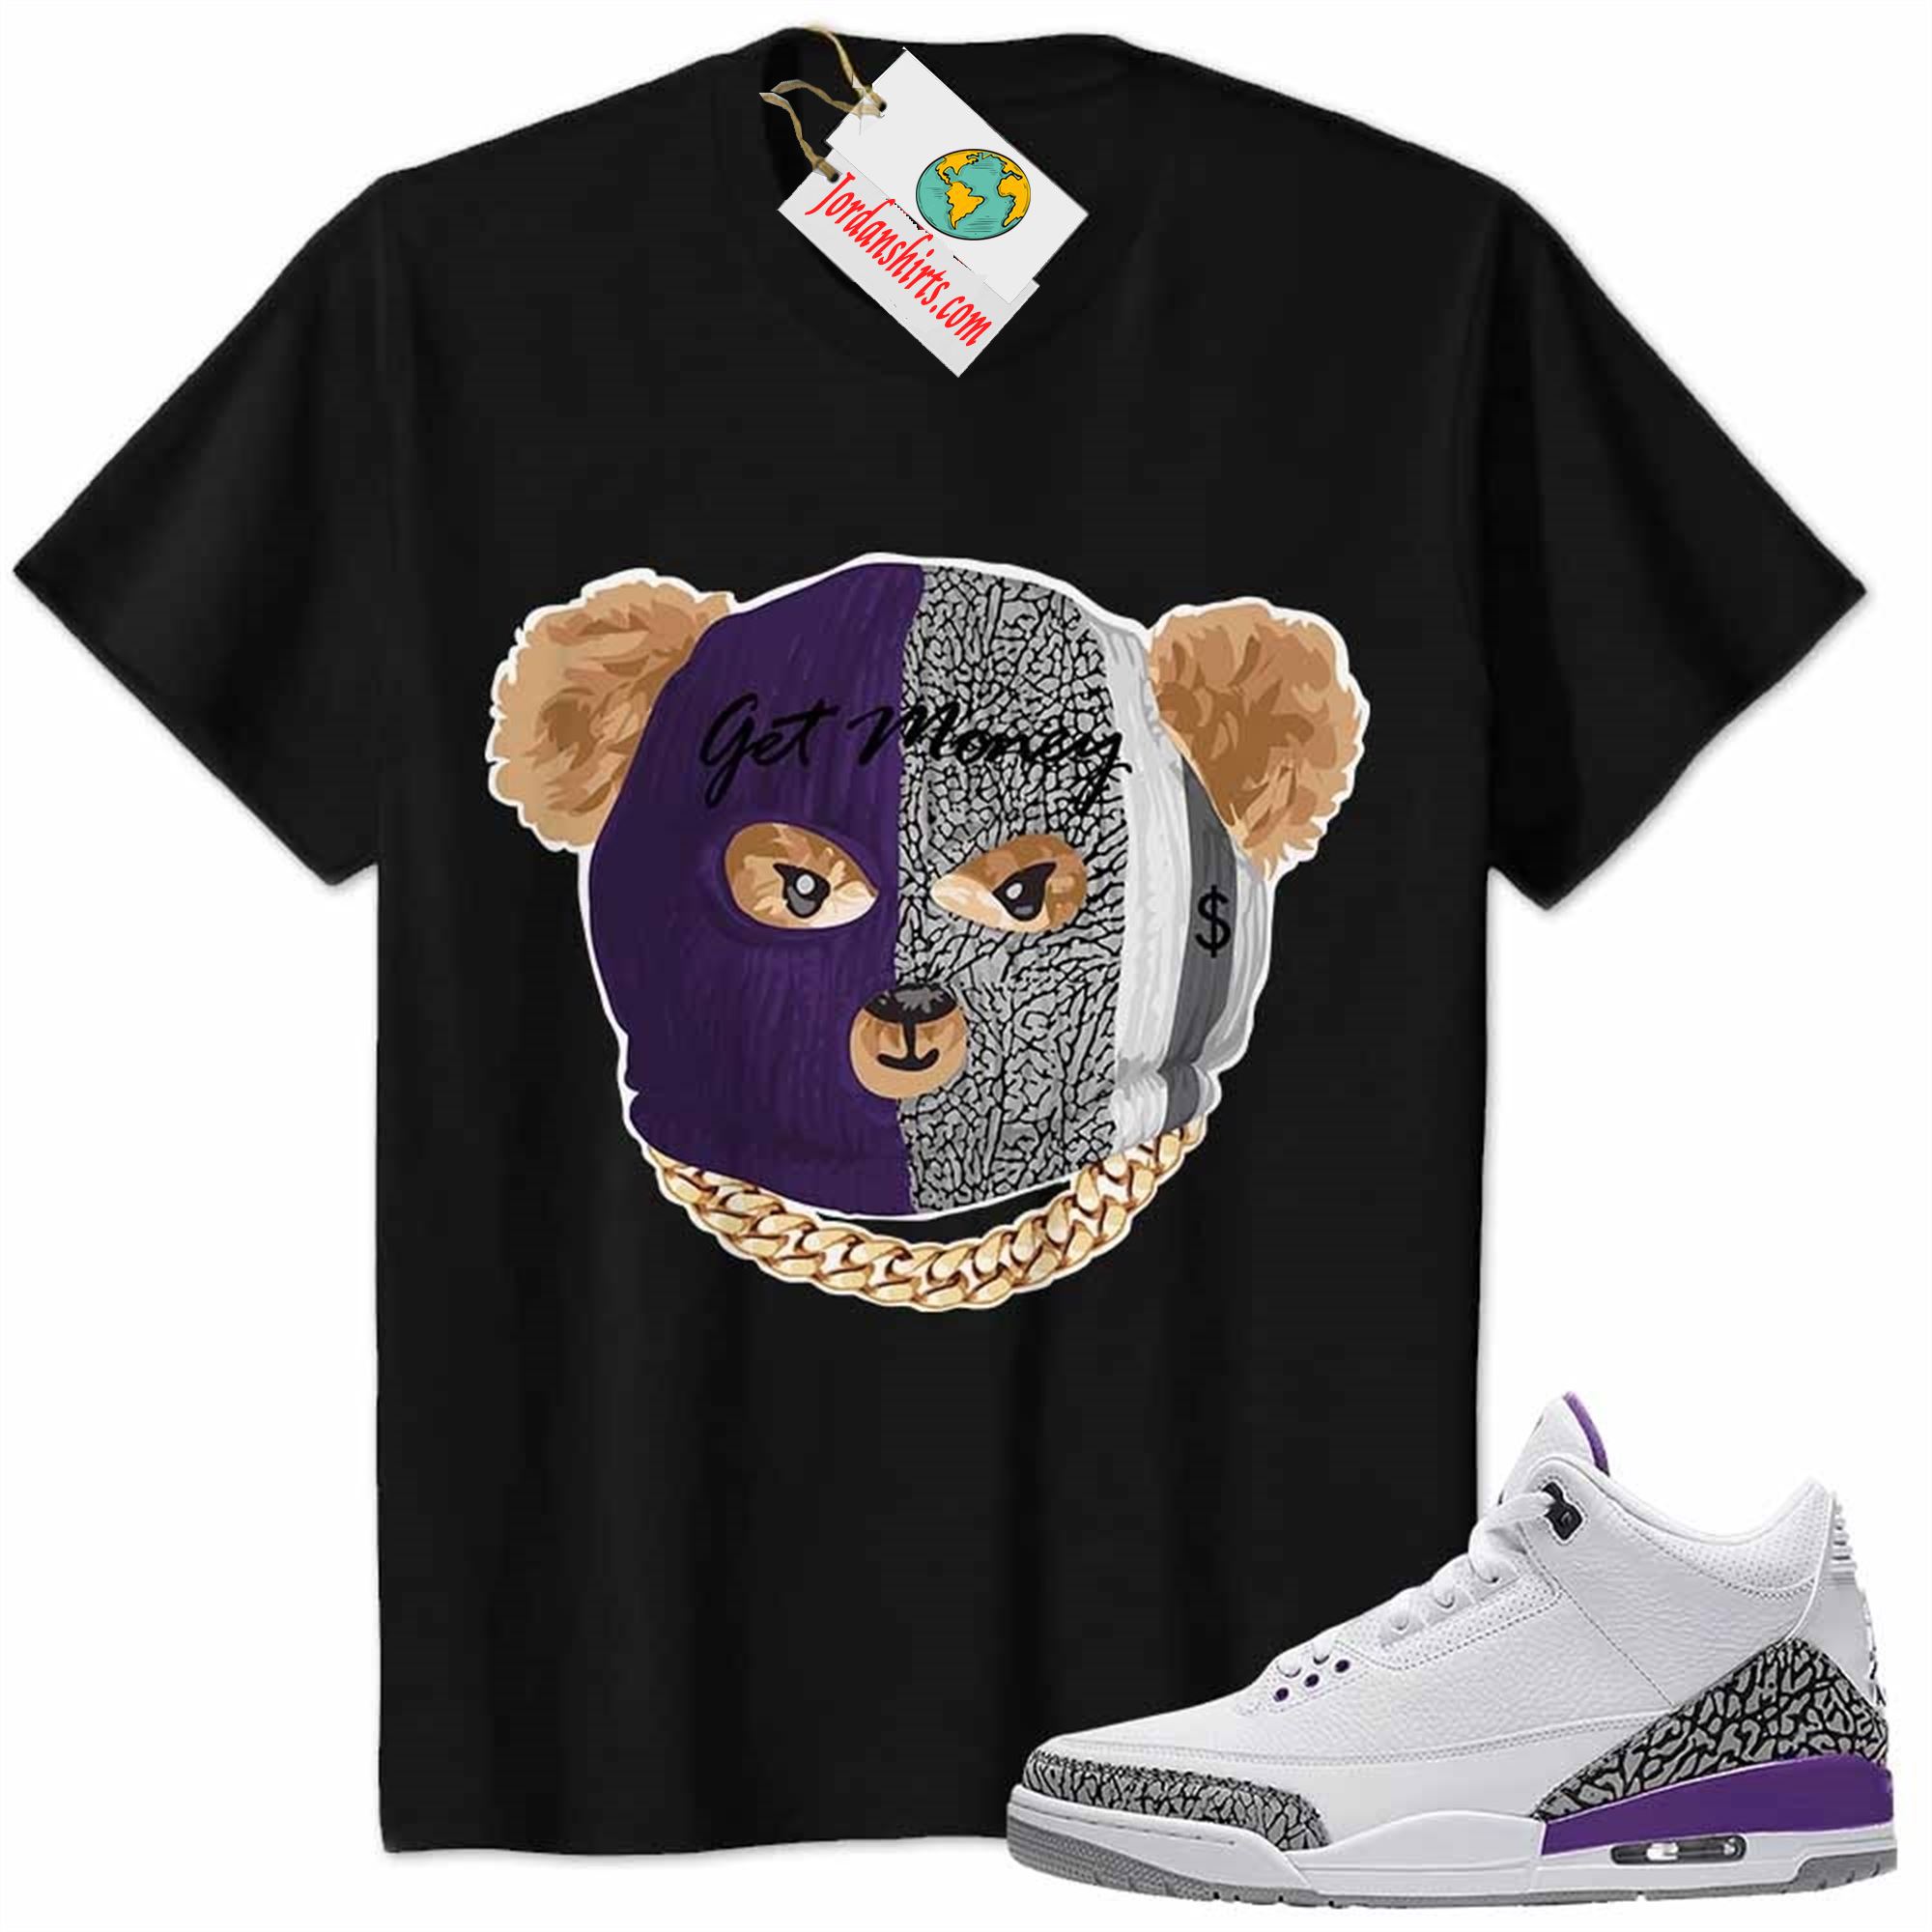 Jordan 3 Shirt, Robber Teddy Get Money Ski Mask Black Air Jordan 3 Wmns Dark Iris Violet Ore 3s Full Size Up To 5xl